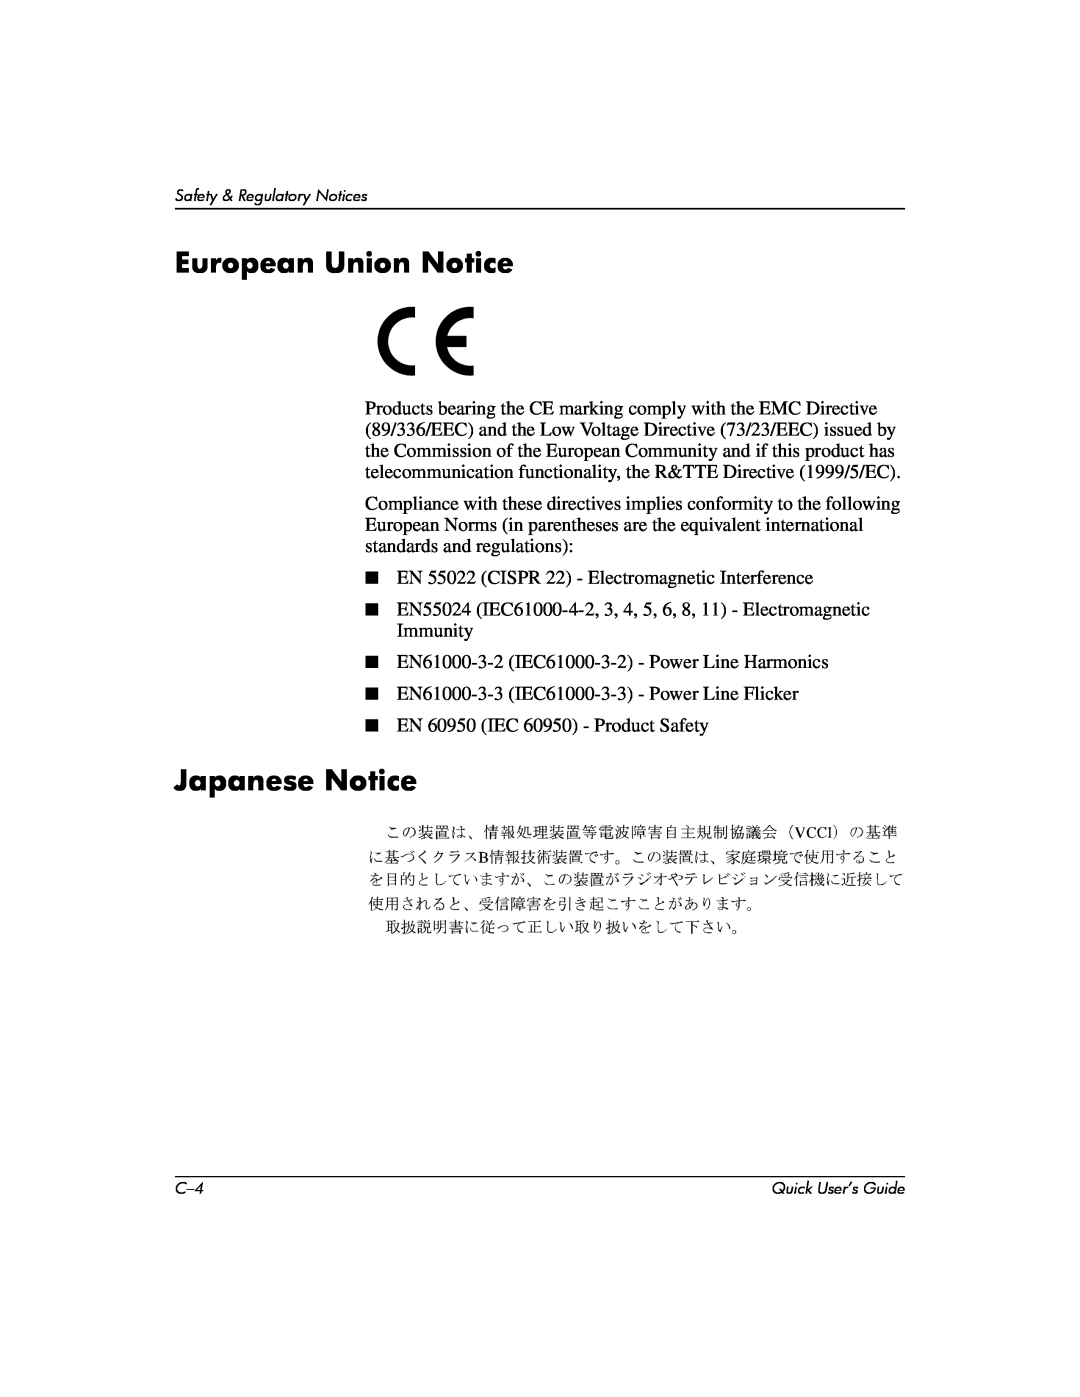 Compaq D510 e-pc manual European Union Notice, Japanese Notice 